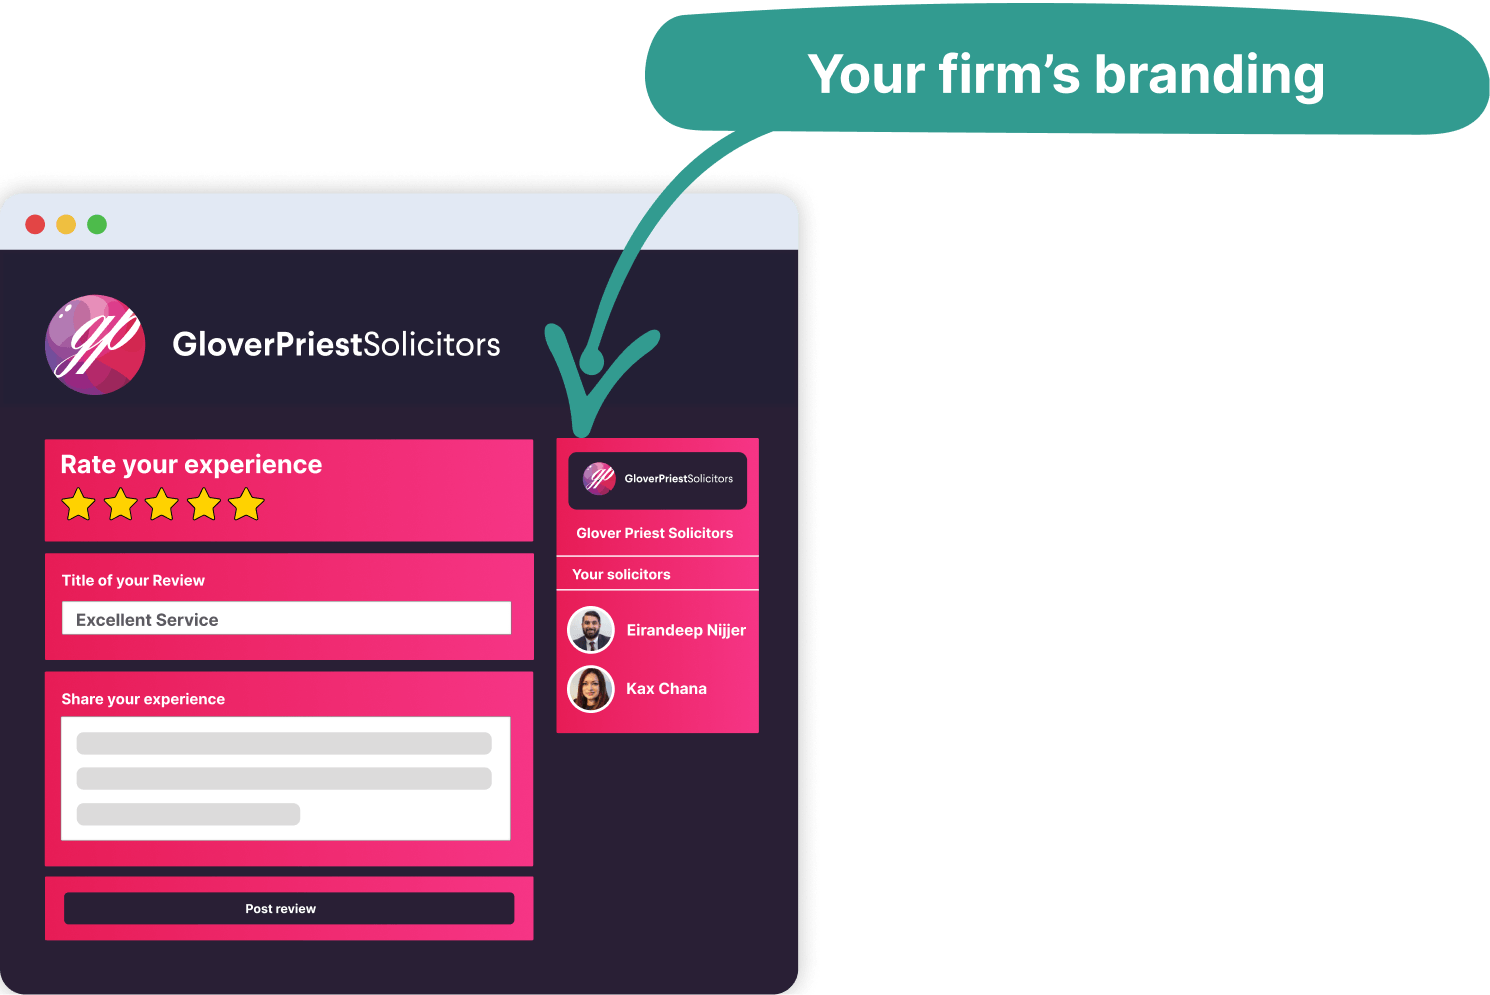 Custom questionnaire - add custom firm branding